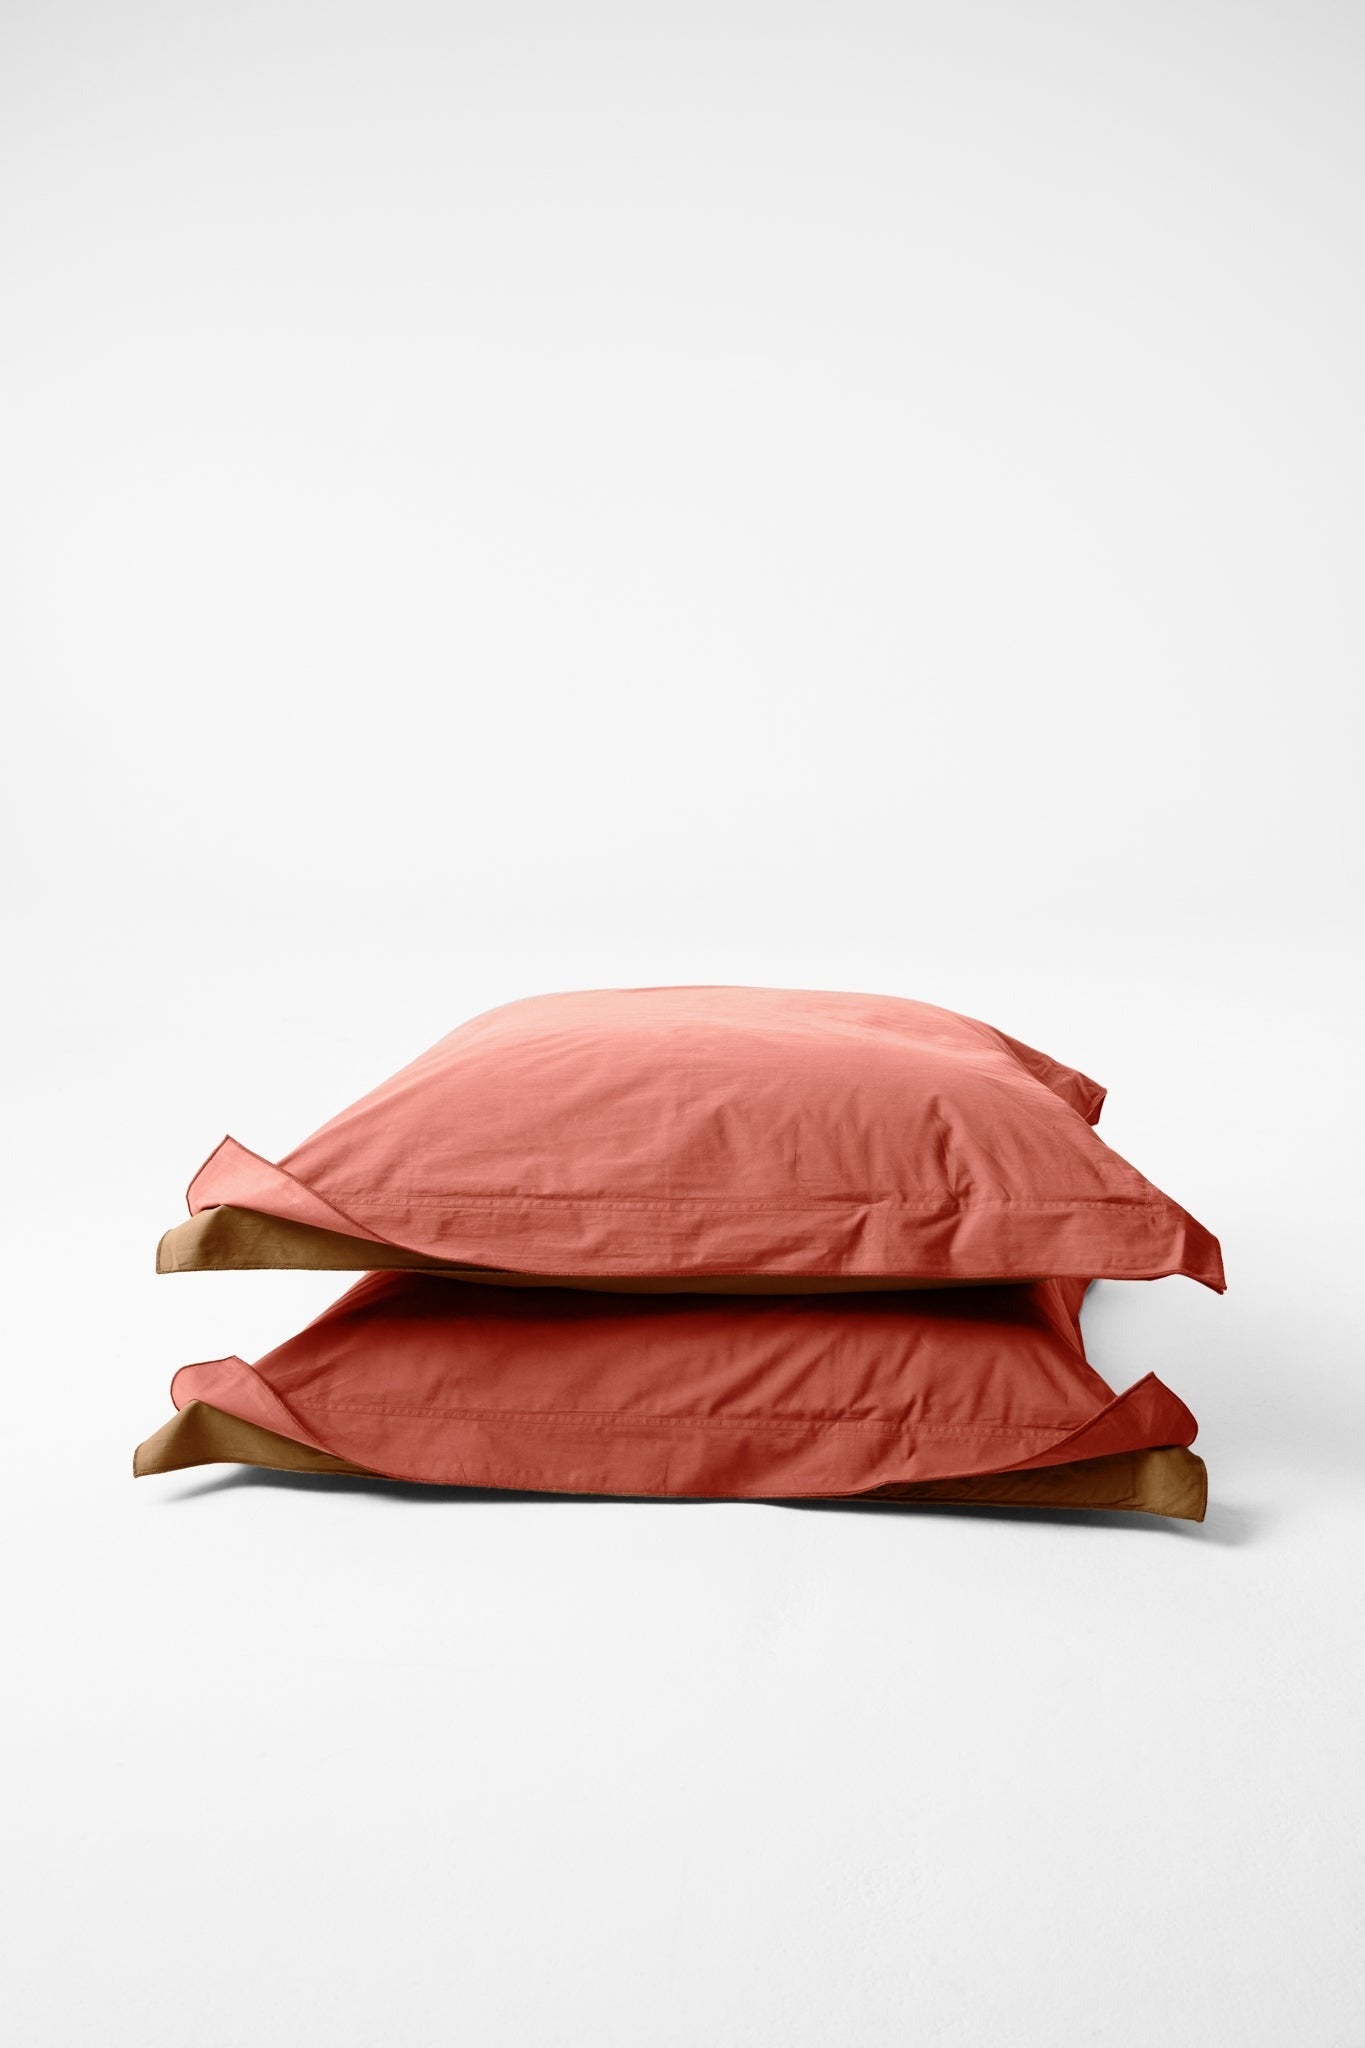 Bi Colour Organic Cotton Percale Pillow Pair - Carob & Ochre Red Pillows in Euro Pillow